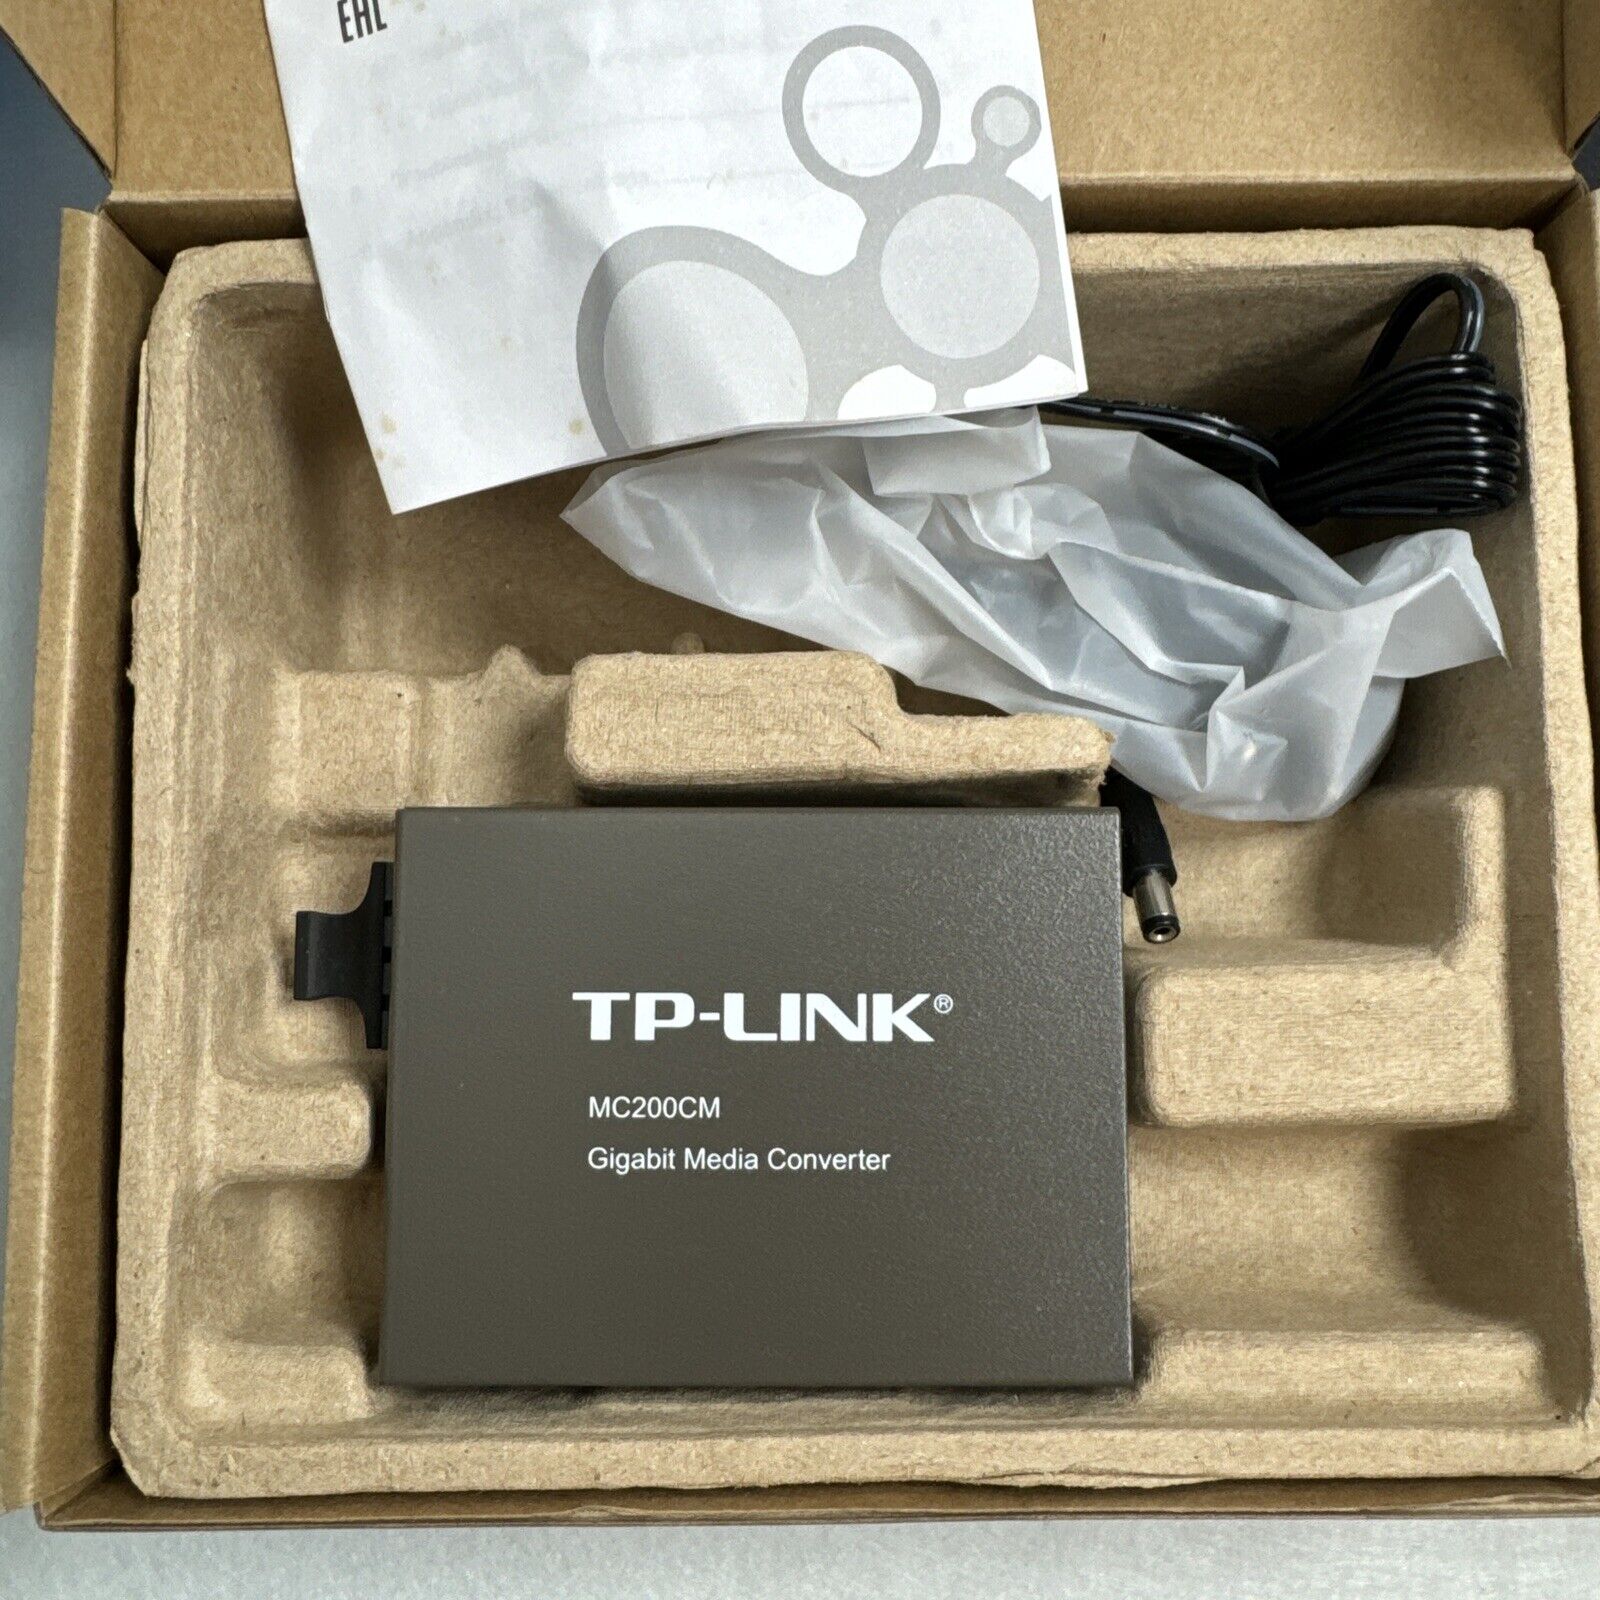 Lot of 2 TP-LINK MC200CM Gigabit Media Converter, 1000Mbps RJ45 to 1000M